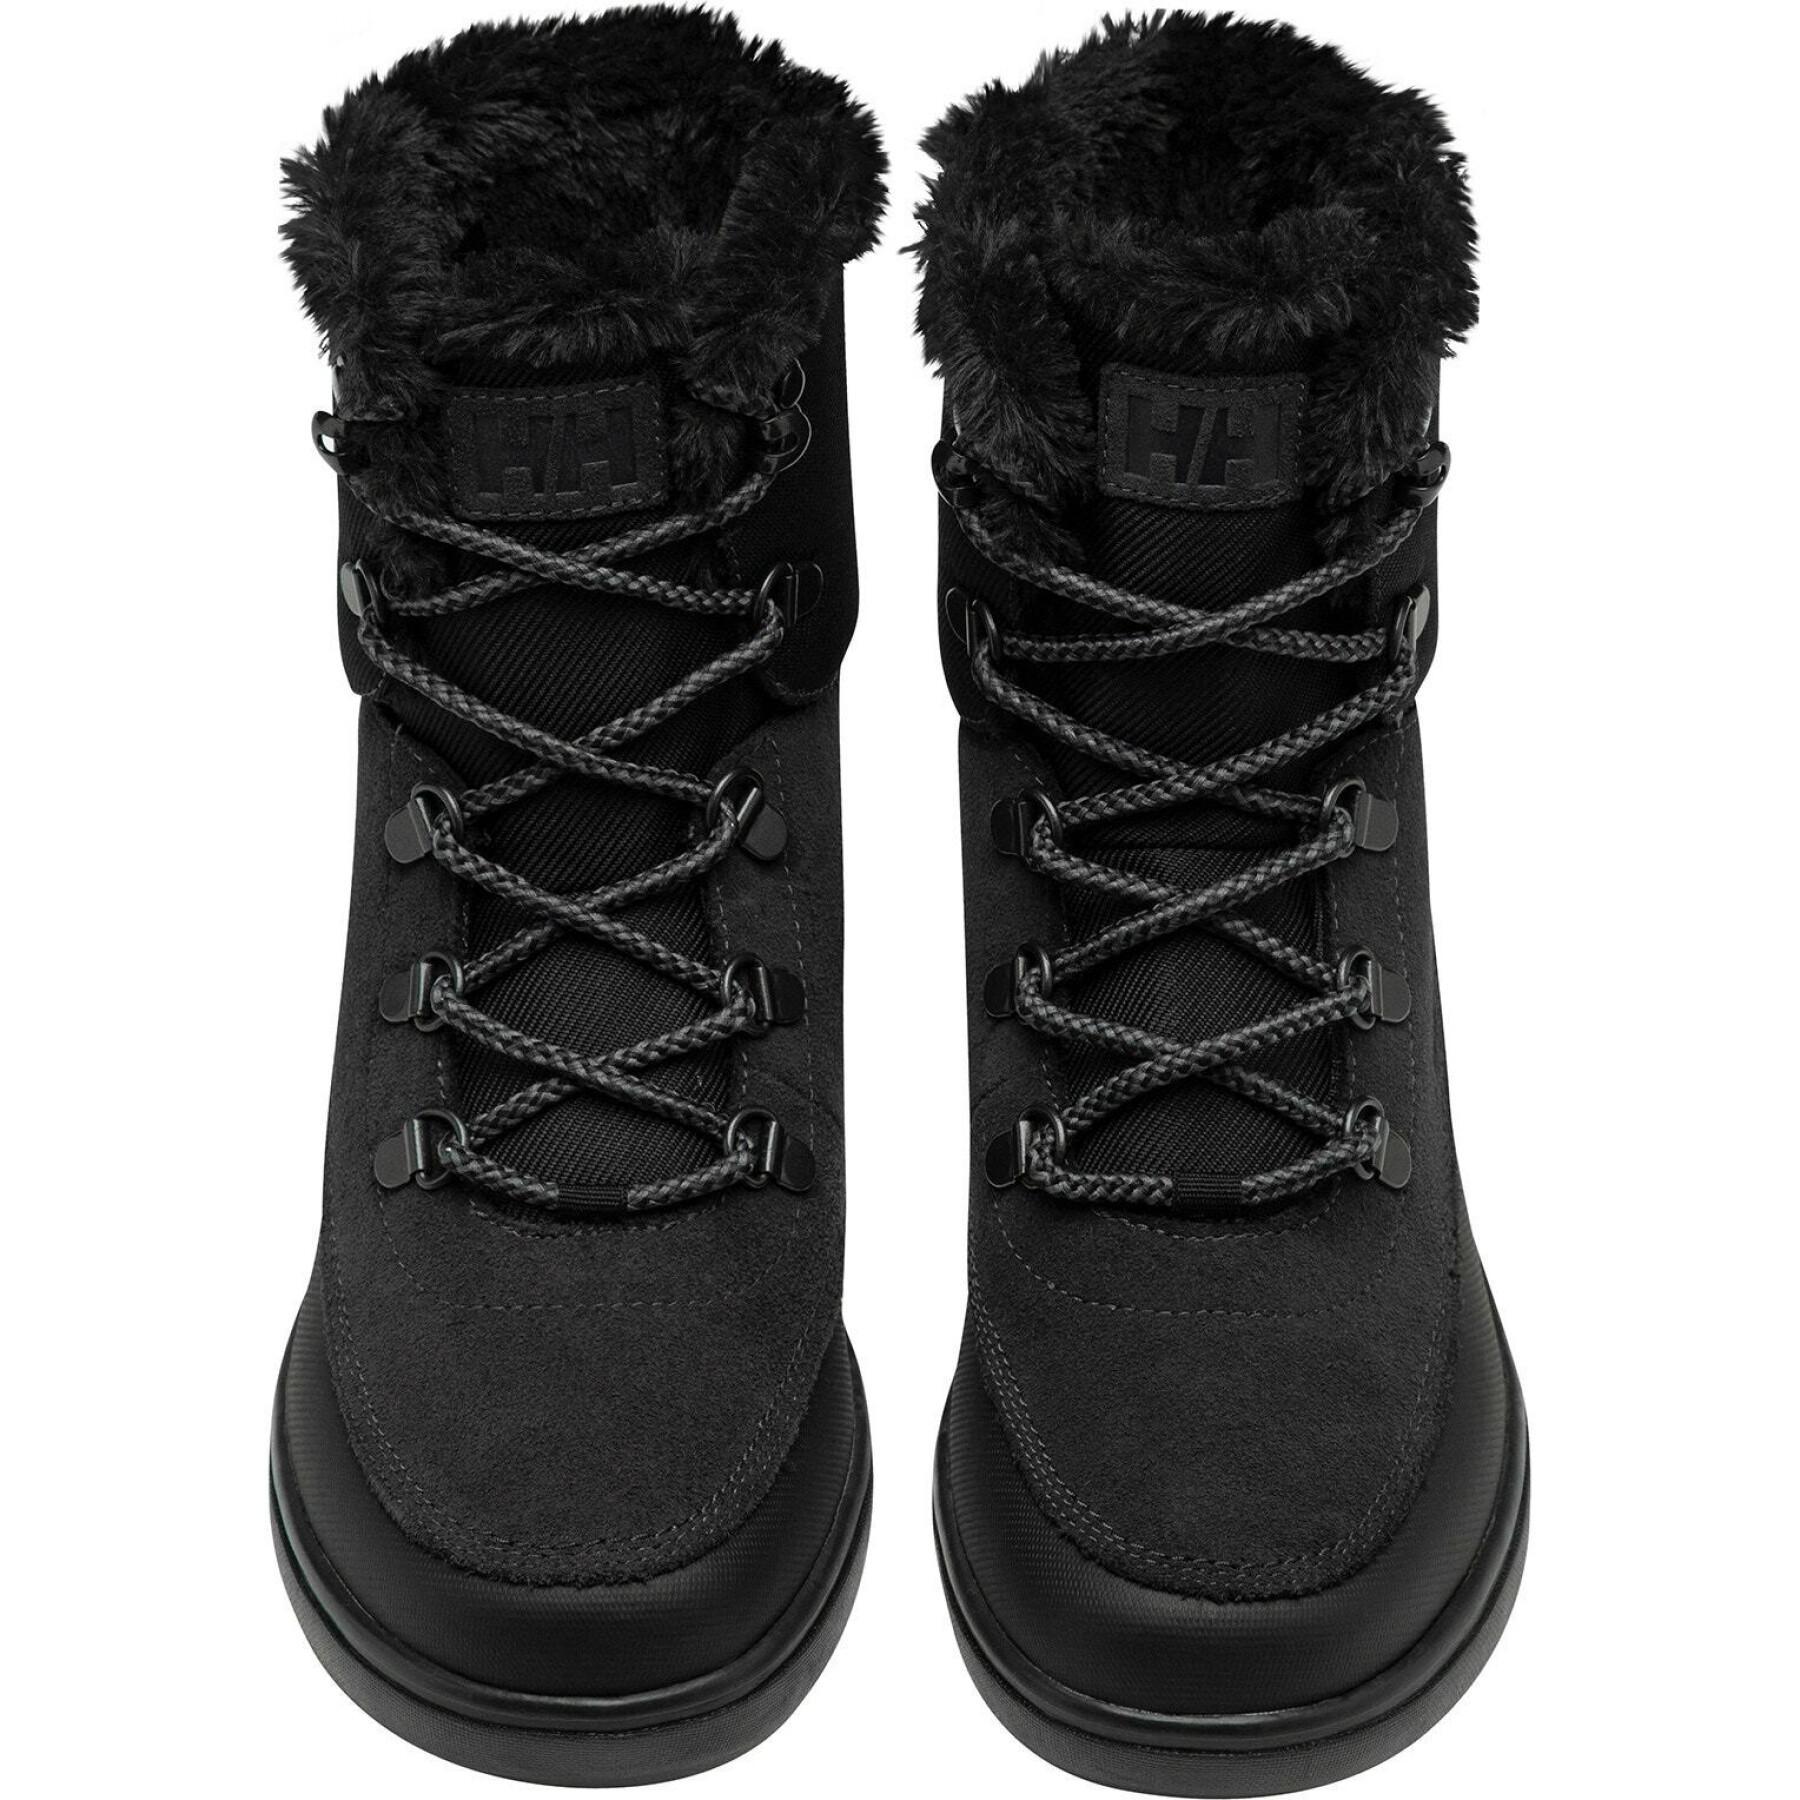 Women's winter boots Helly Hansen Sorrento